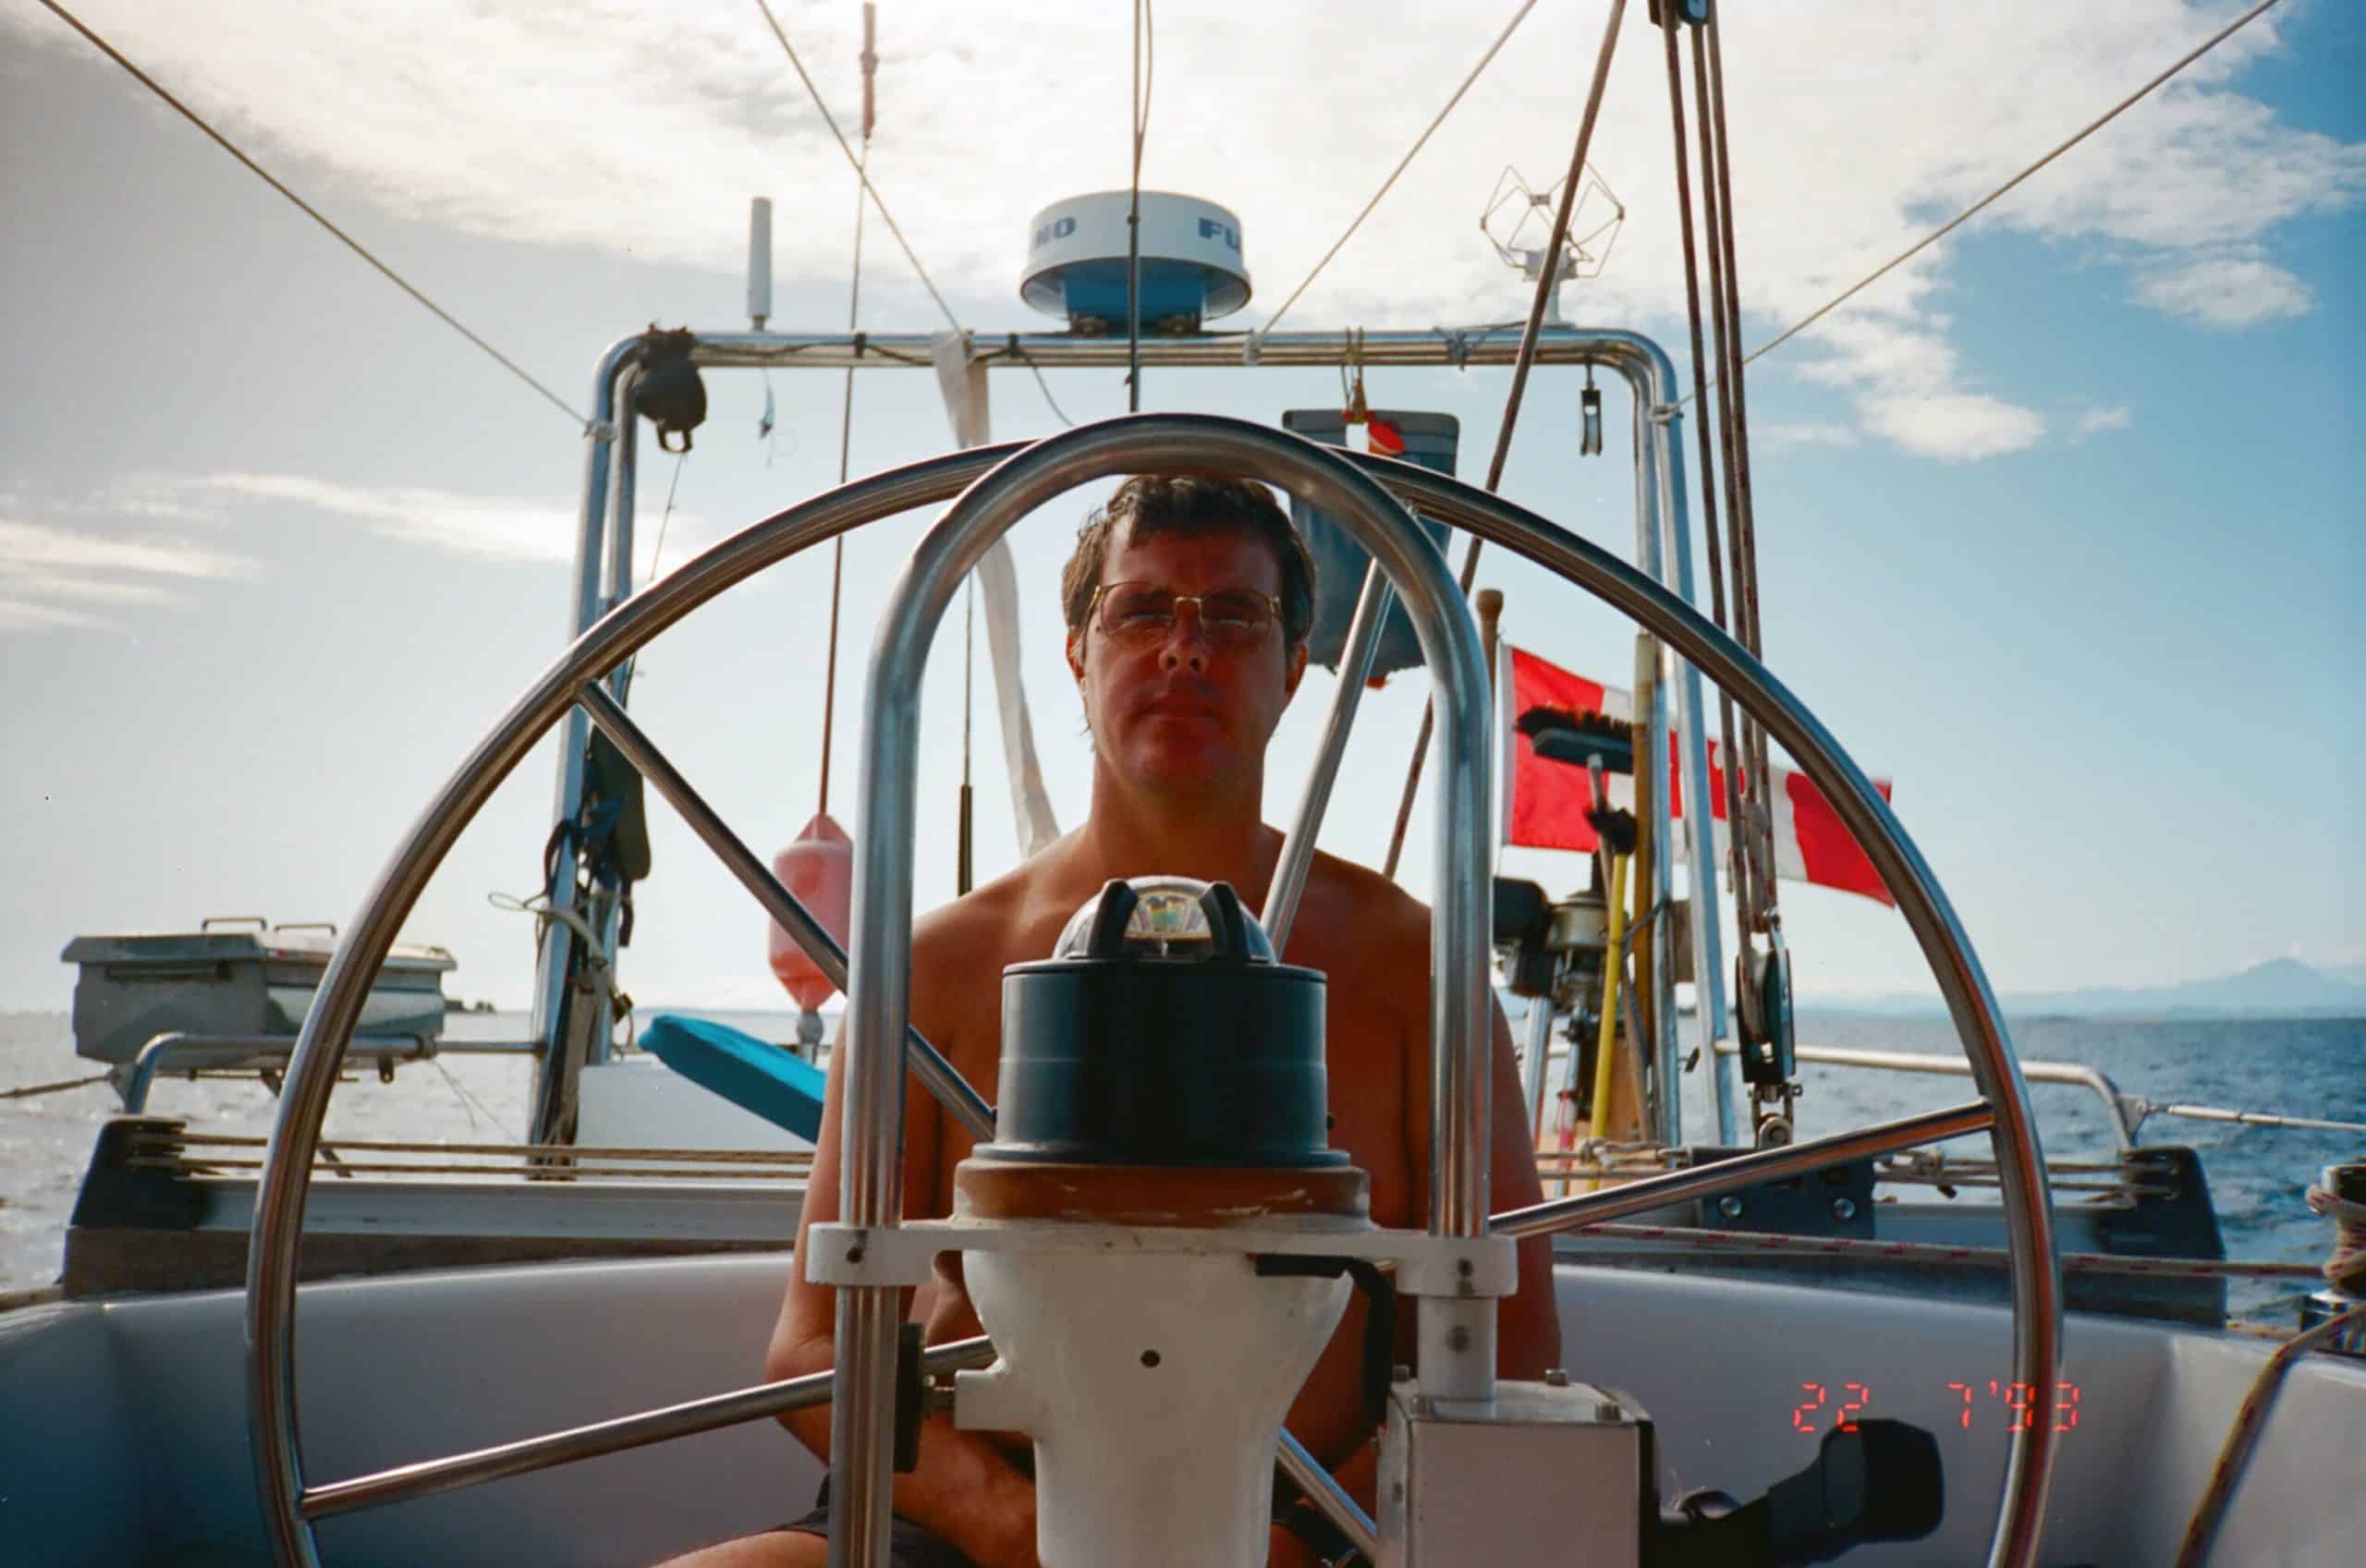 Stephen sailing Royal Salute